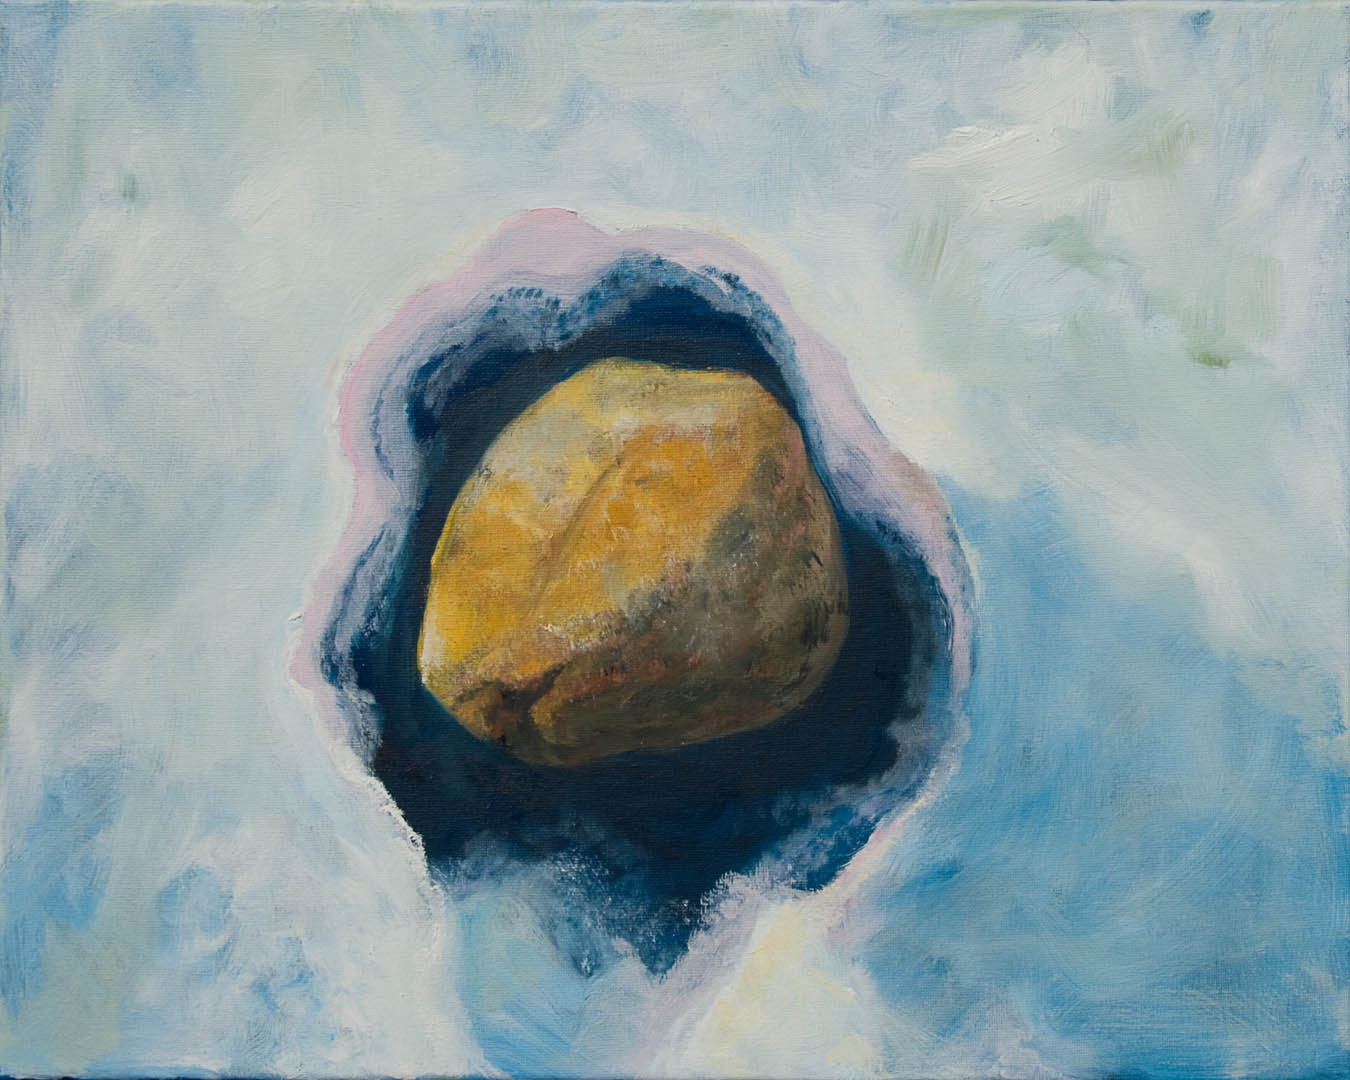 07 Snow Rock, Oil on canvas 16x20" $1600